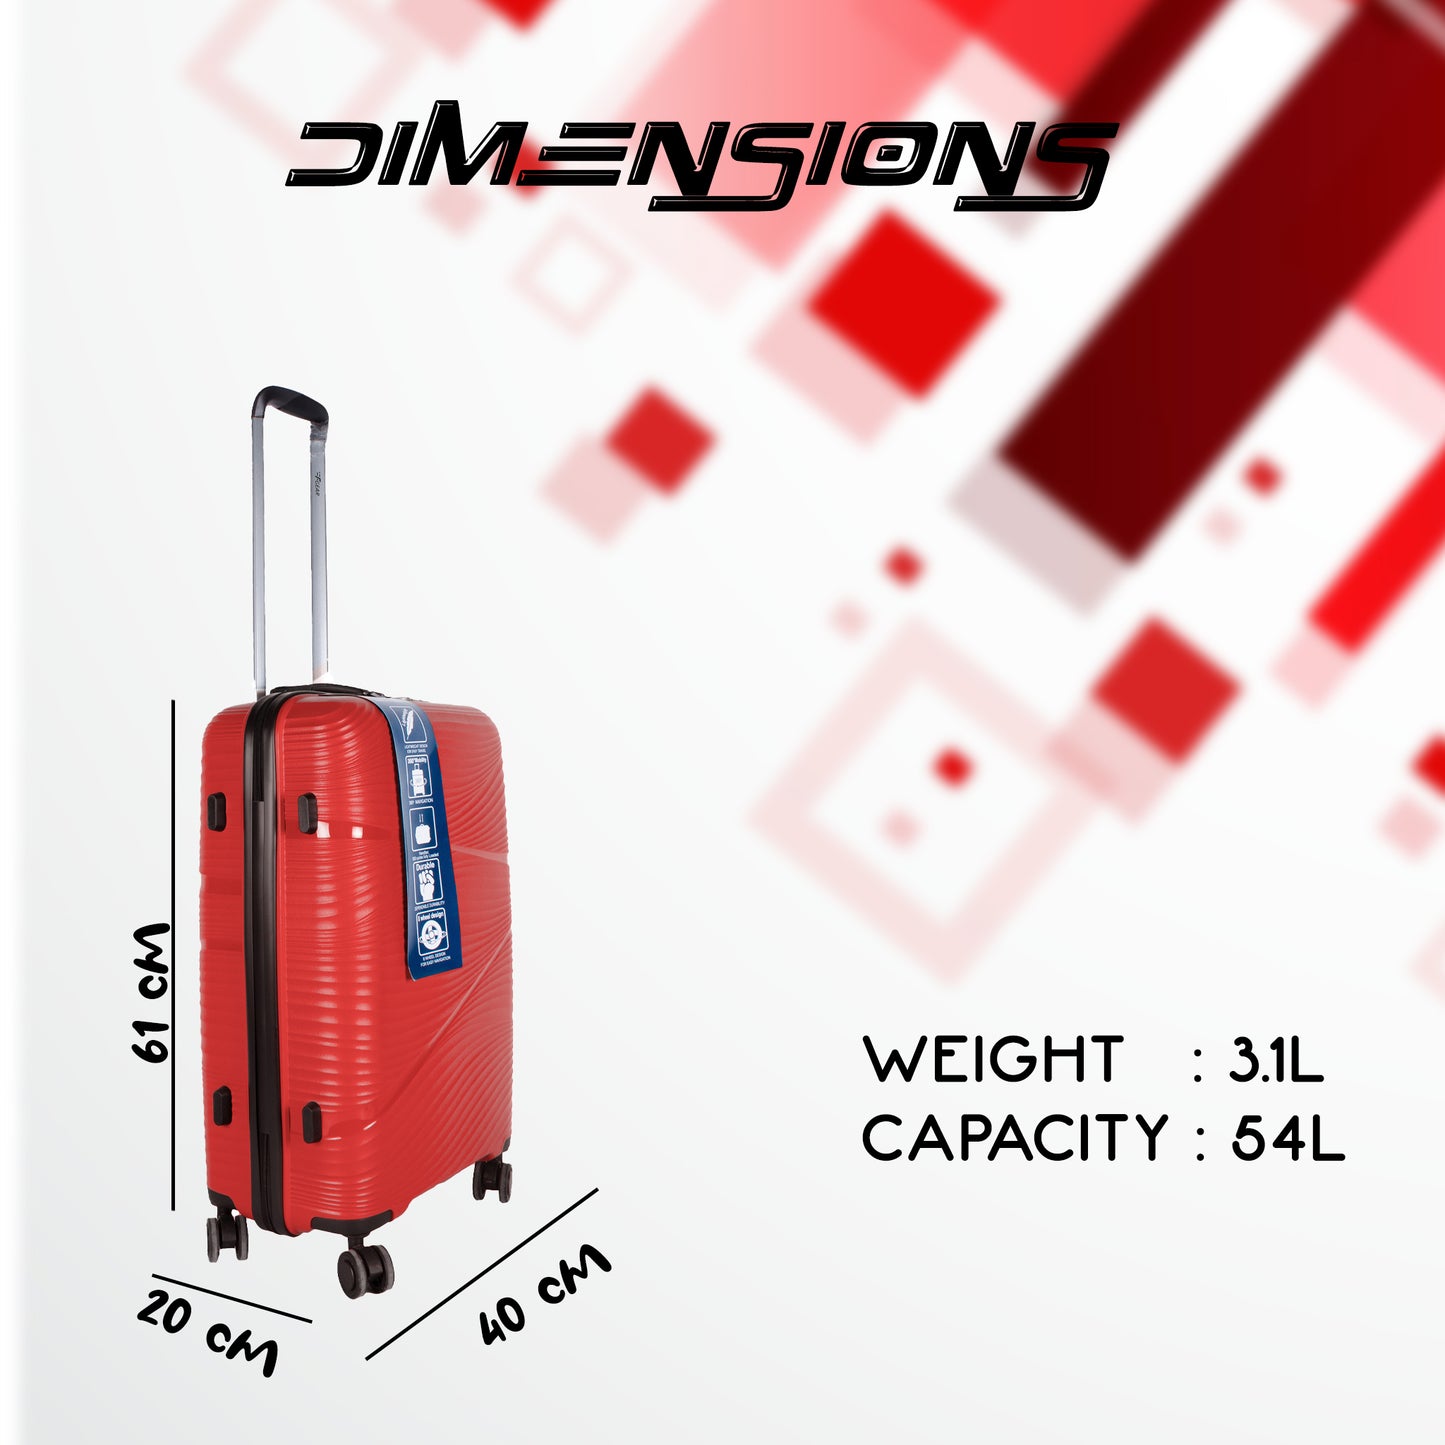 Joy PP008 24" Red Medium Check-in Suitcase